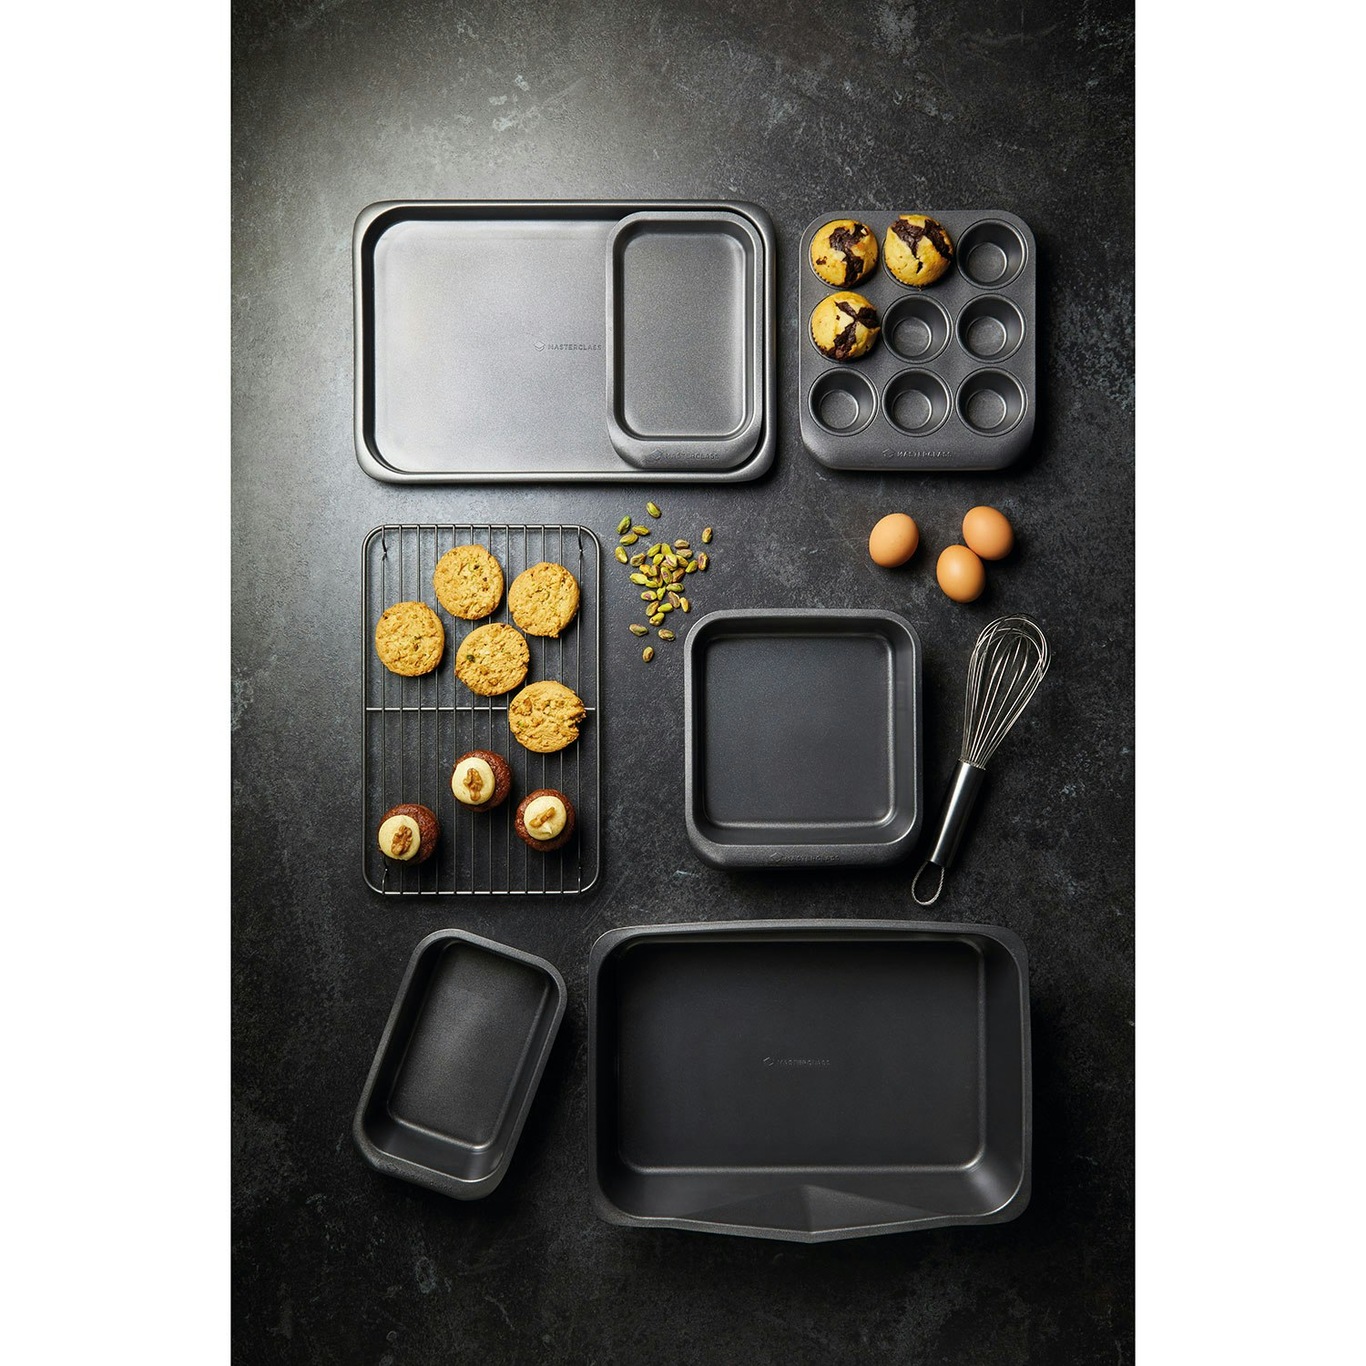 Master Class, Non-Stick Baking Tray, Large - Kitchen Craft @ RoyalDesign